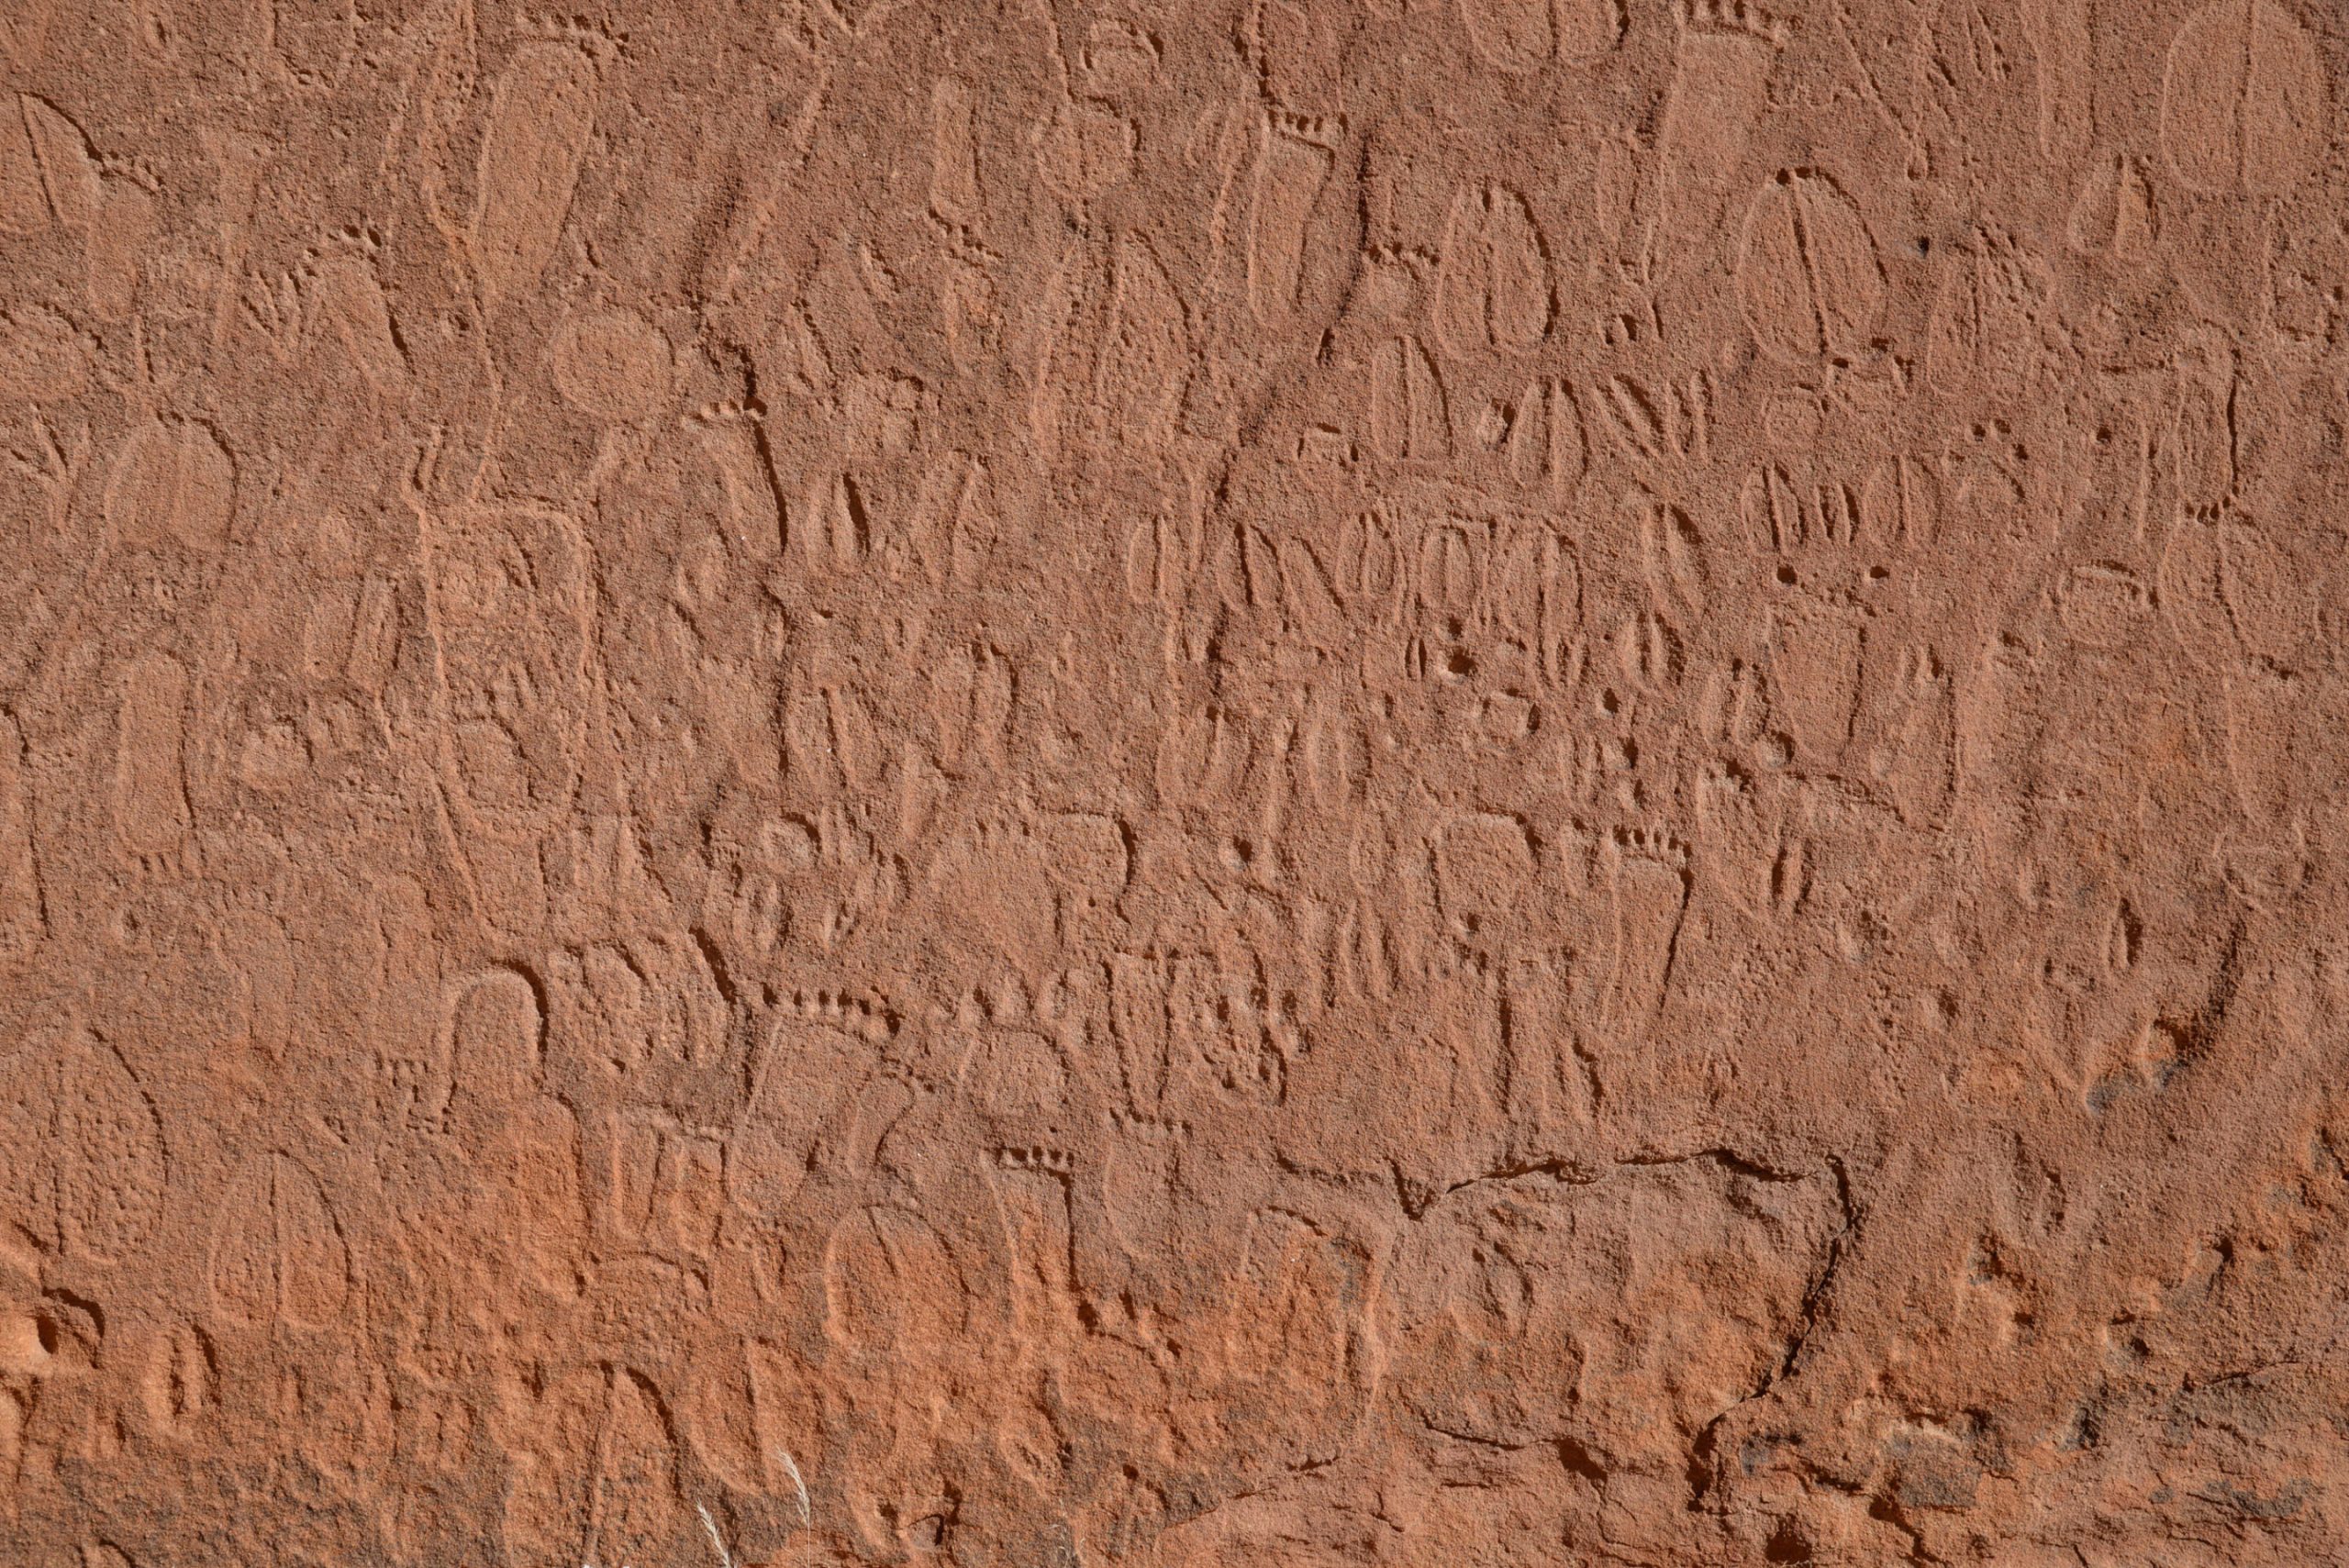 Decoding Namibia's Ancient Rock Art